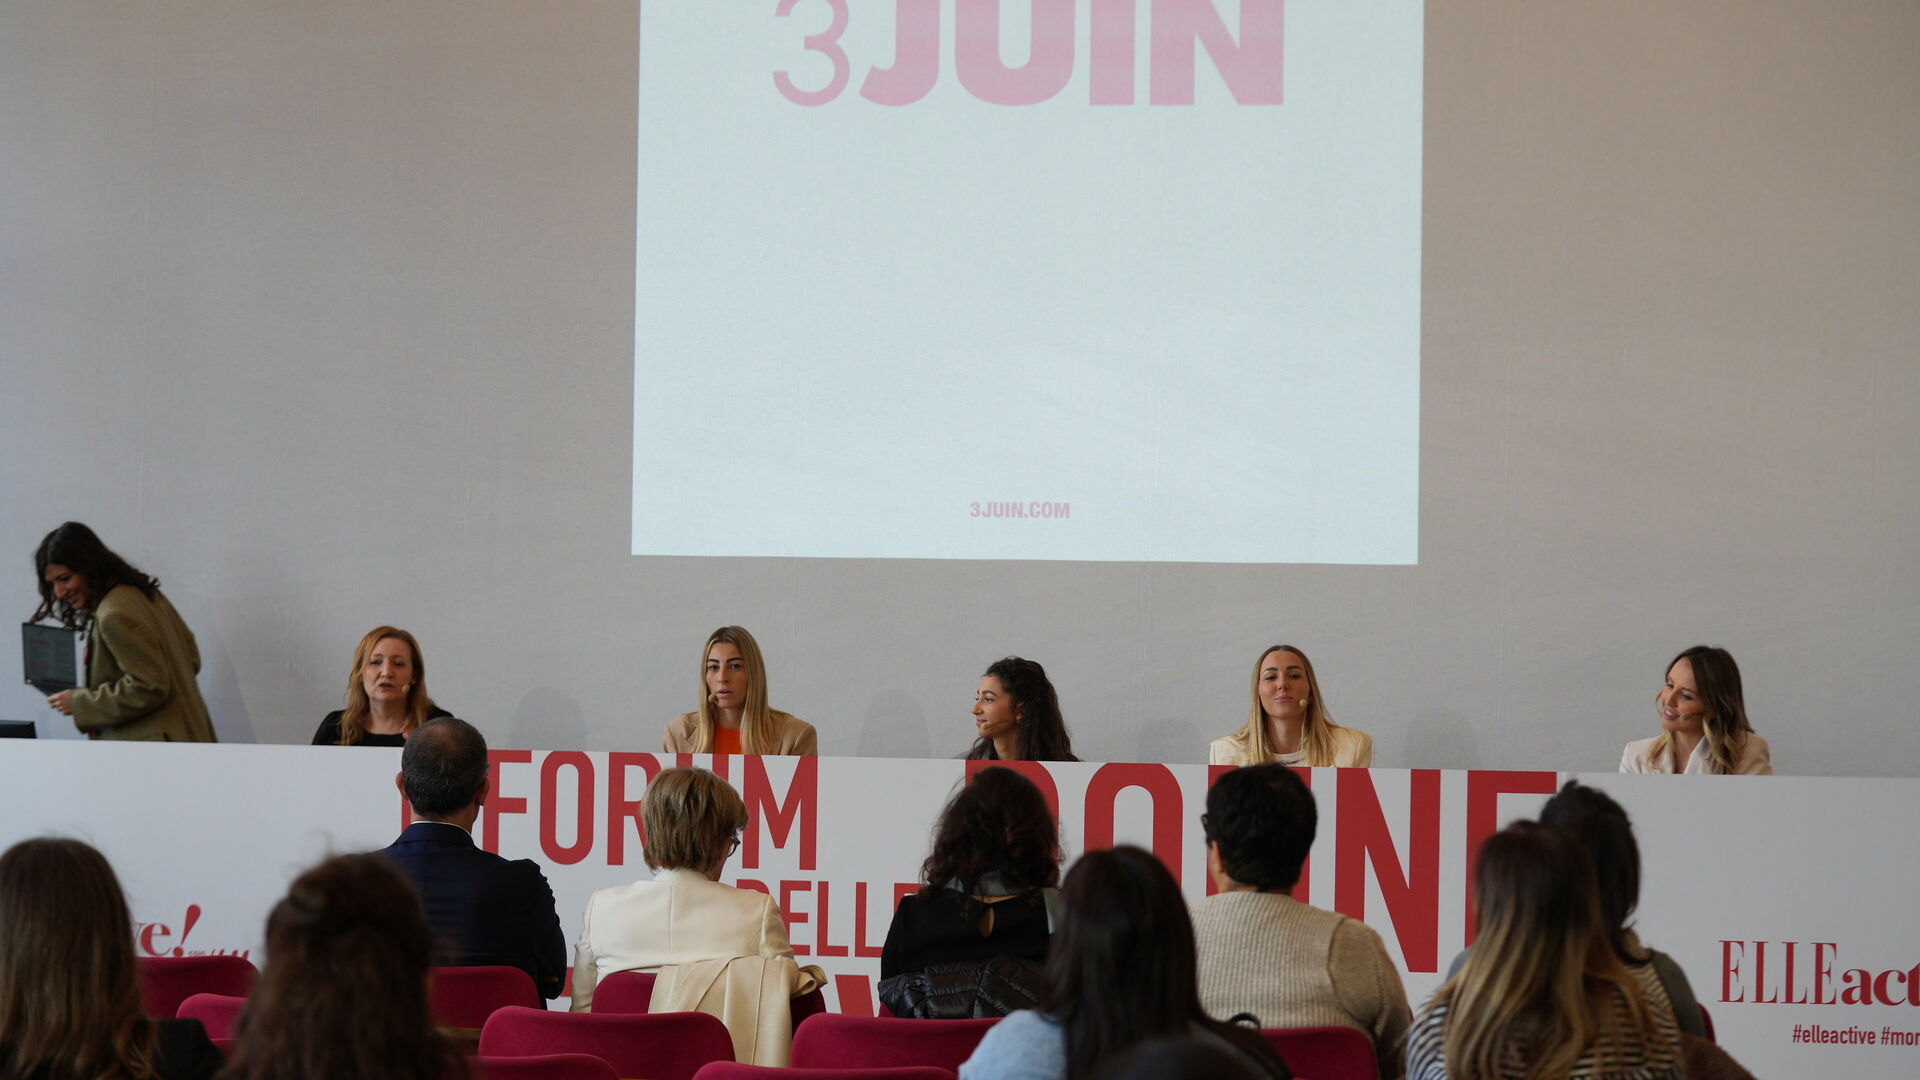 3JUIN'den Perla, Antonia ve Margherita Alessandri, Hearst Digital CEO'su Simona Zanette ile “Elle active!”de röportaj yaptı.